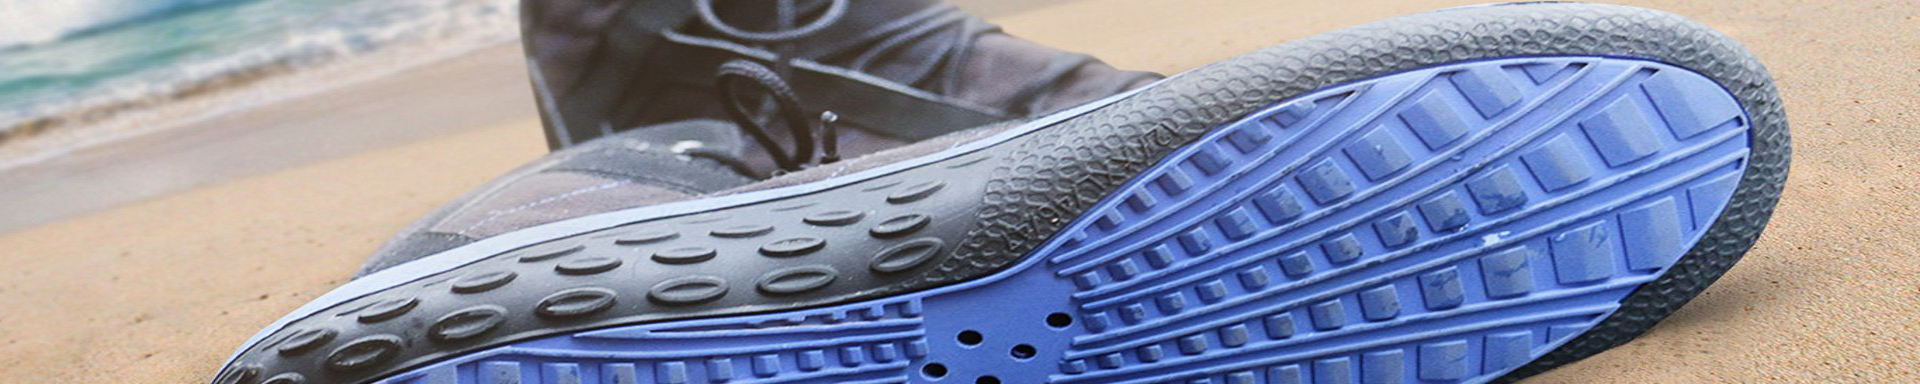 Watercraft Shoes | MunroPowersports.com | Munro Industries mp-100803030408